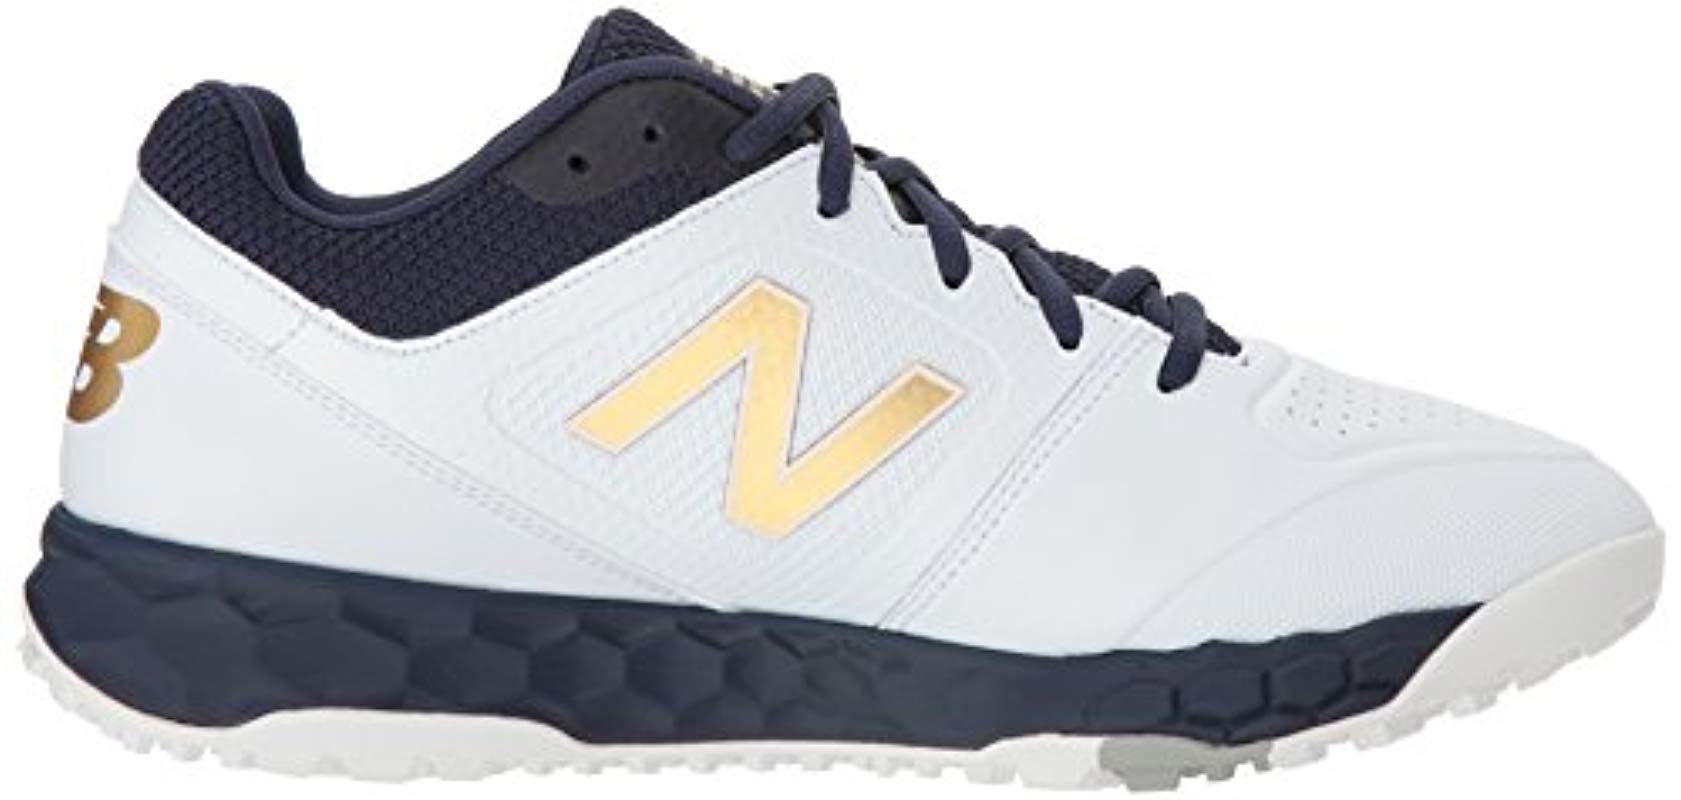 Lyst - New Balance Velo V1 Turf Softball Shoe, Navy/white, 6 D Us